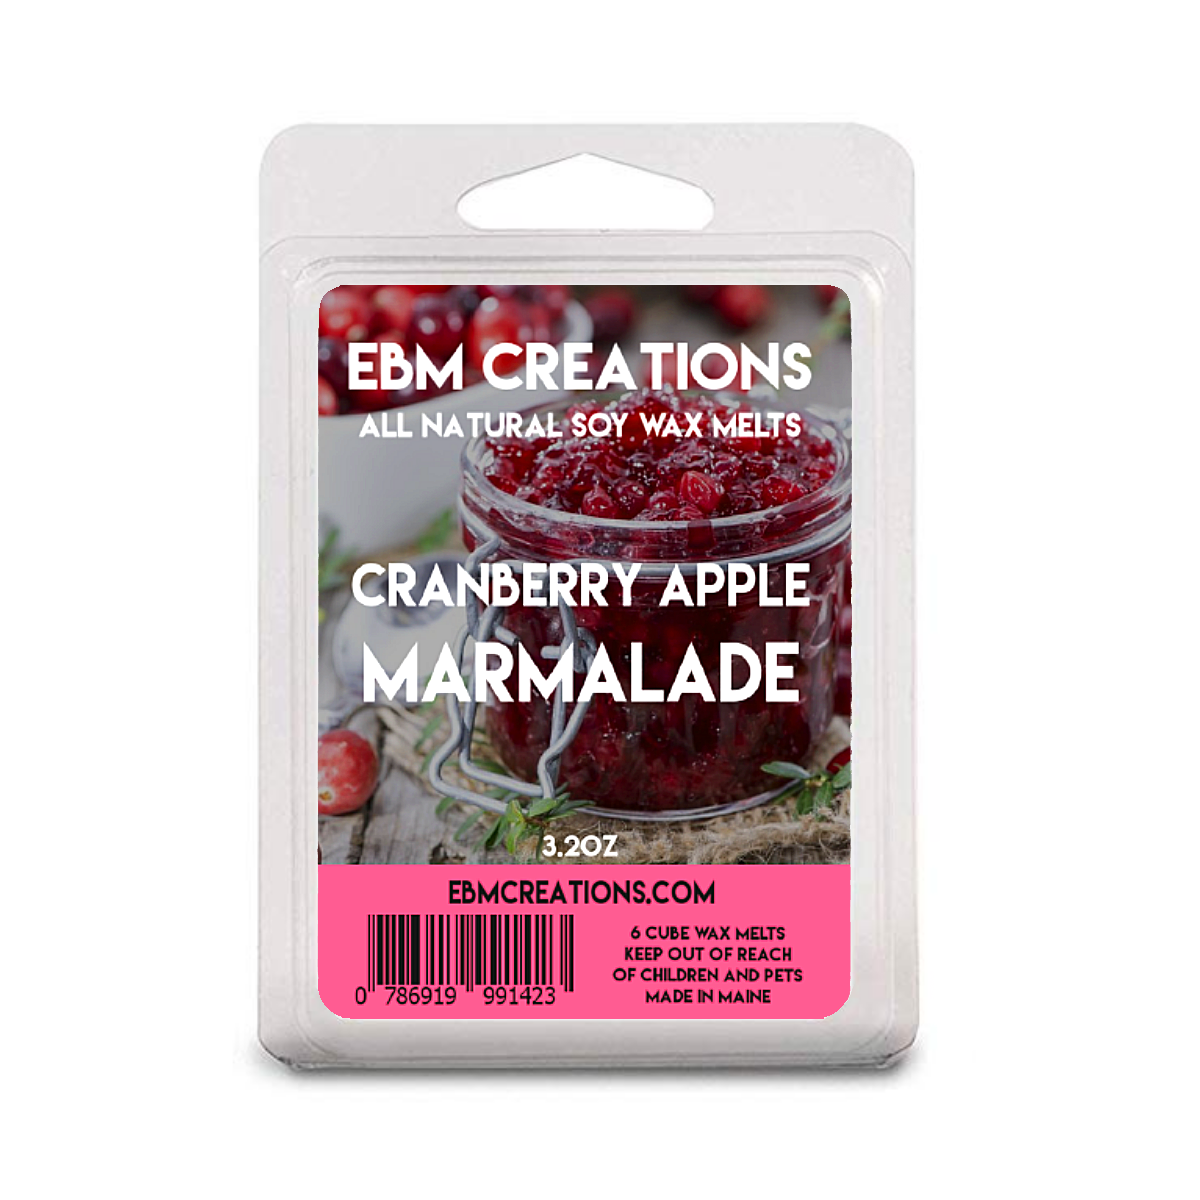 Apple & Cinnamon - 3.2 oz Clamshell